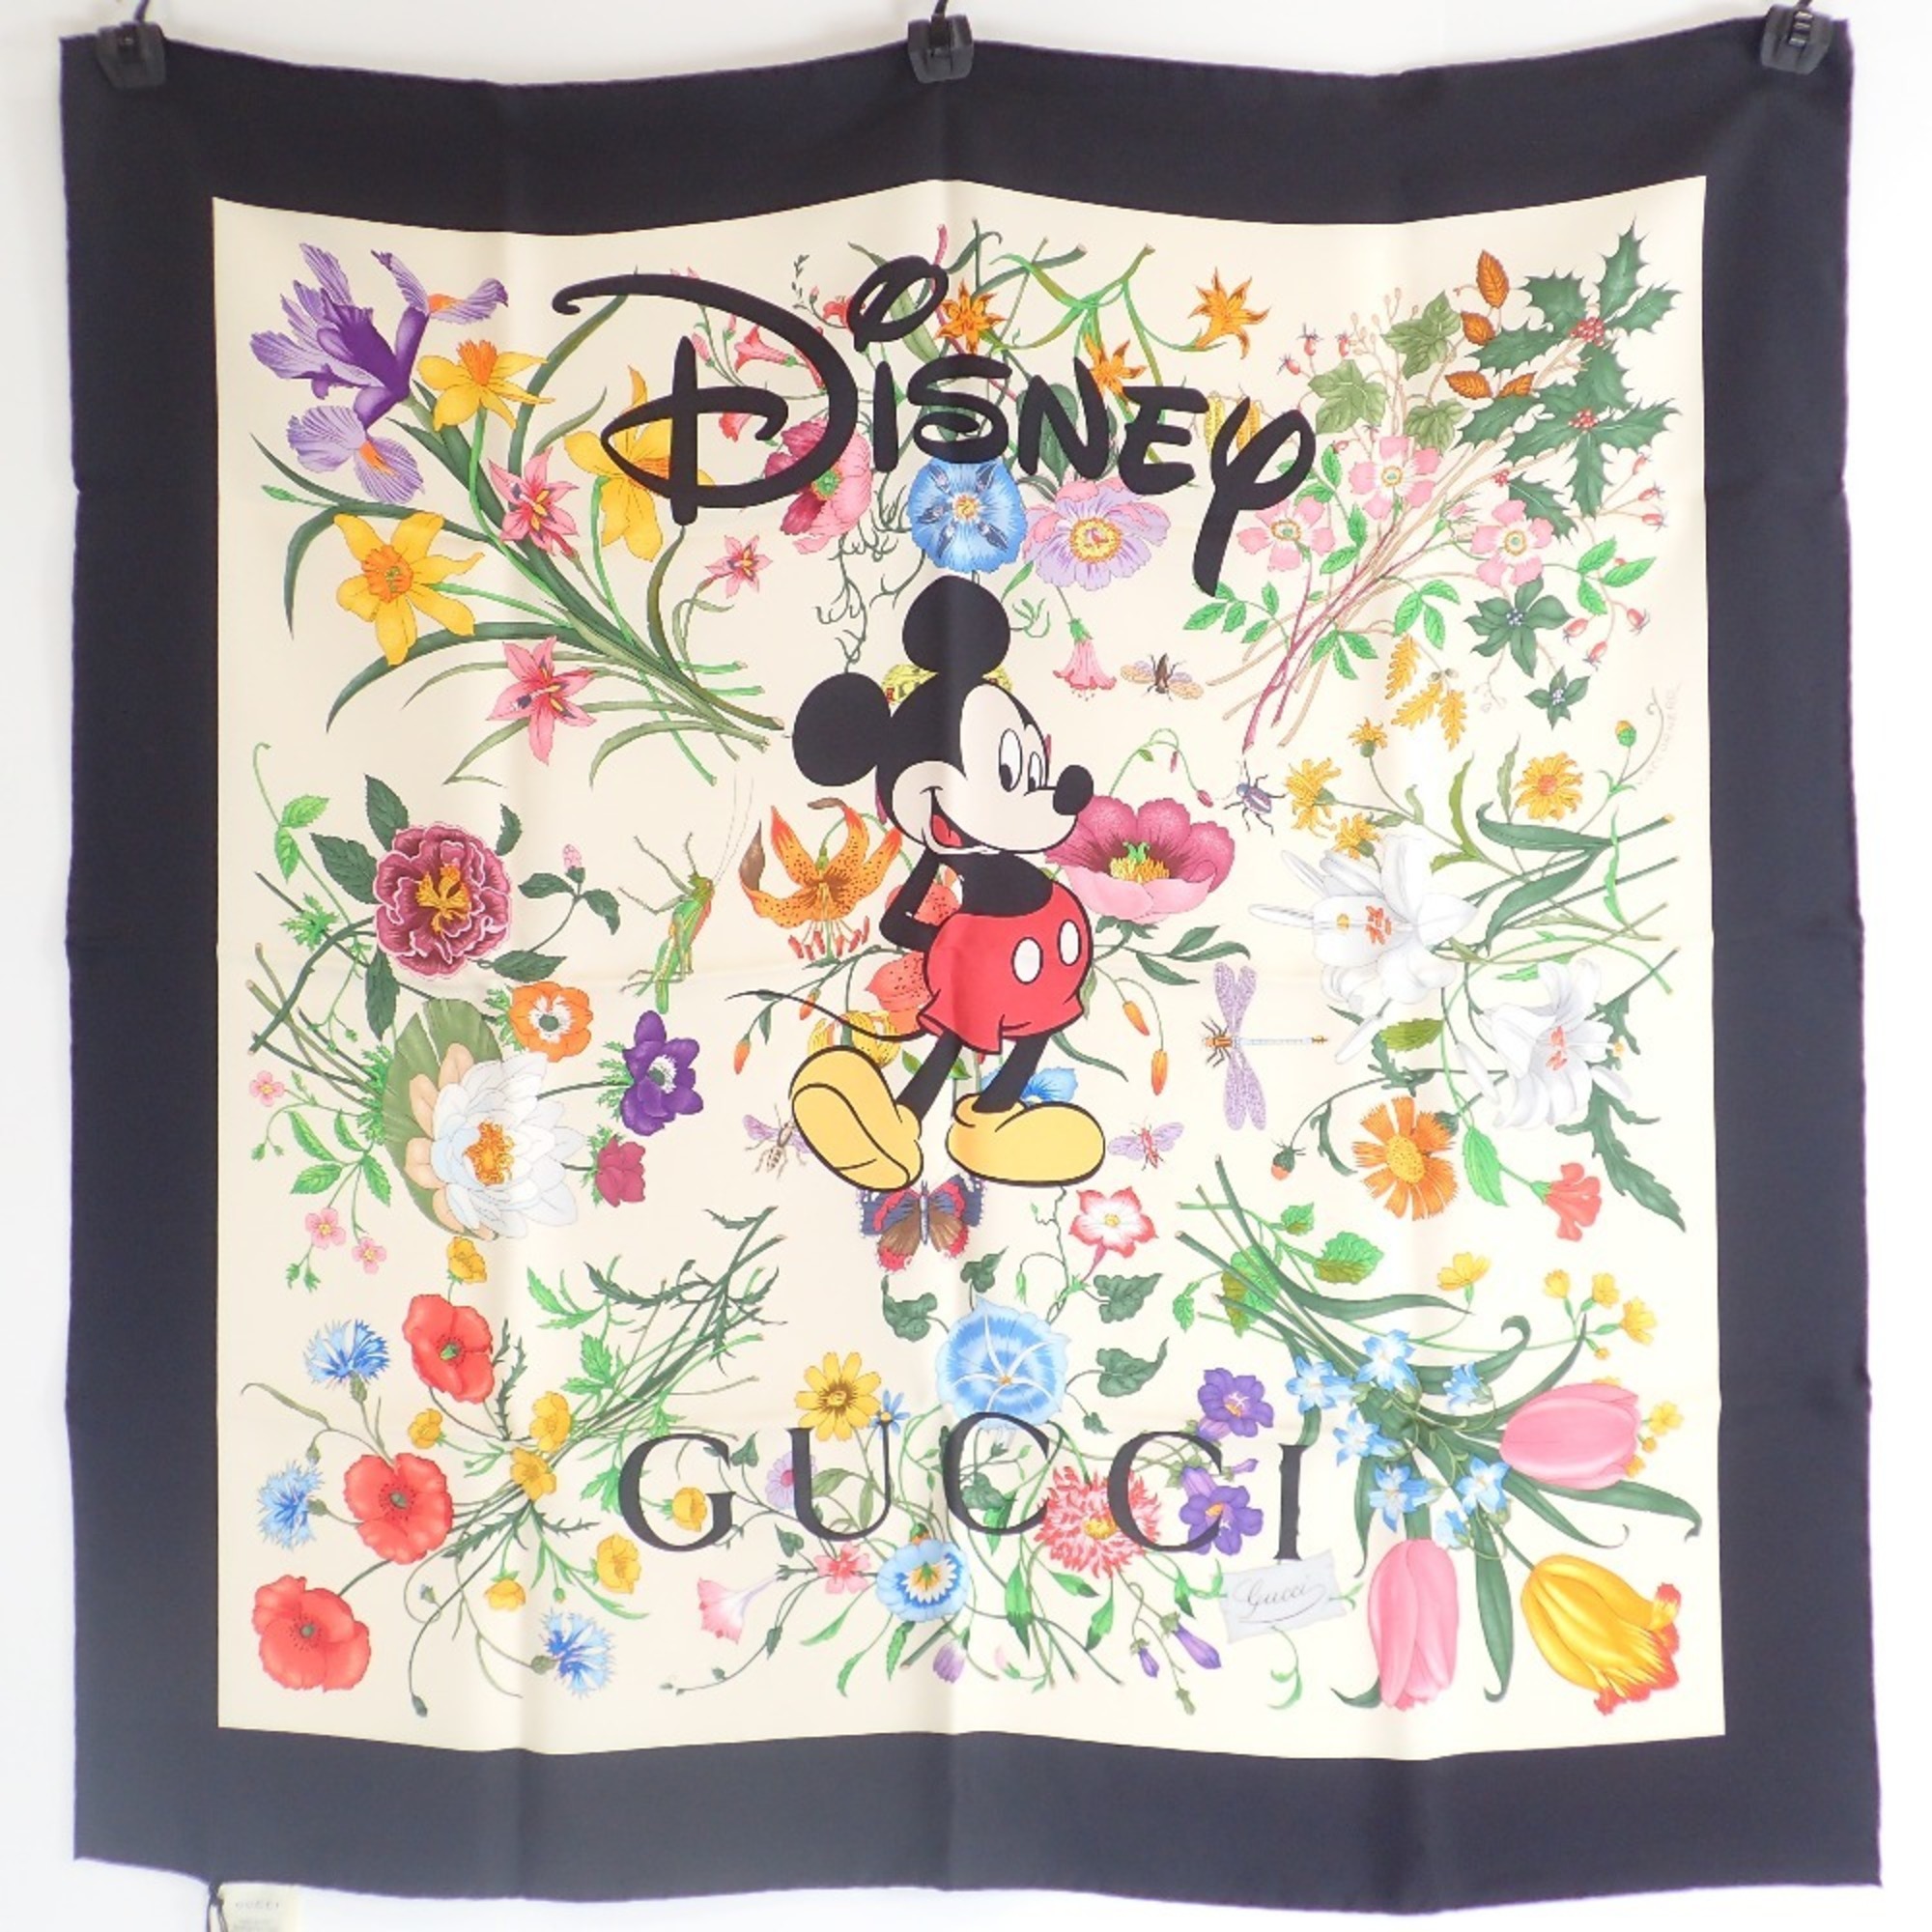 GUCCI x Disney 607325 3G001 9888 Mickey Floral 100% Silk Scarf Ivory Multicolor Women's